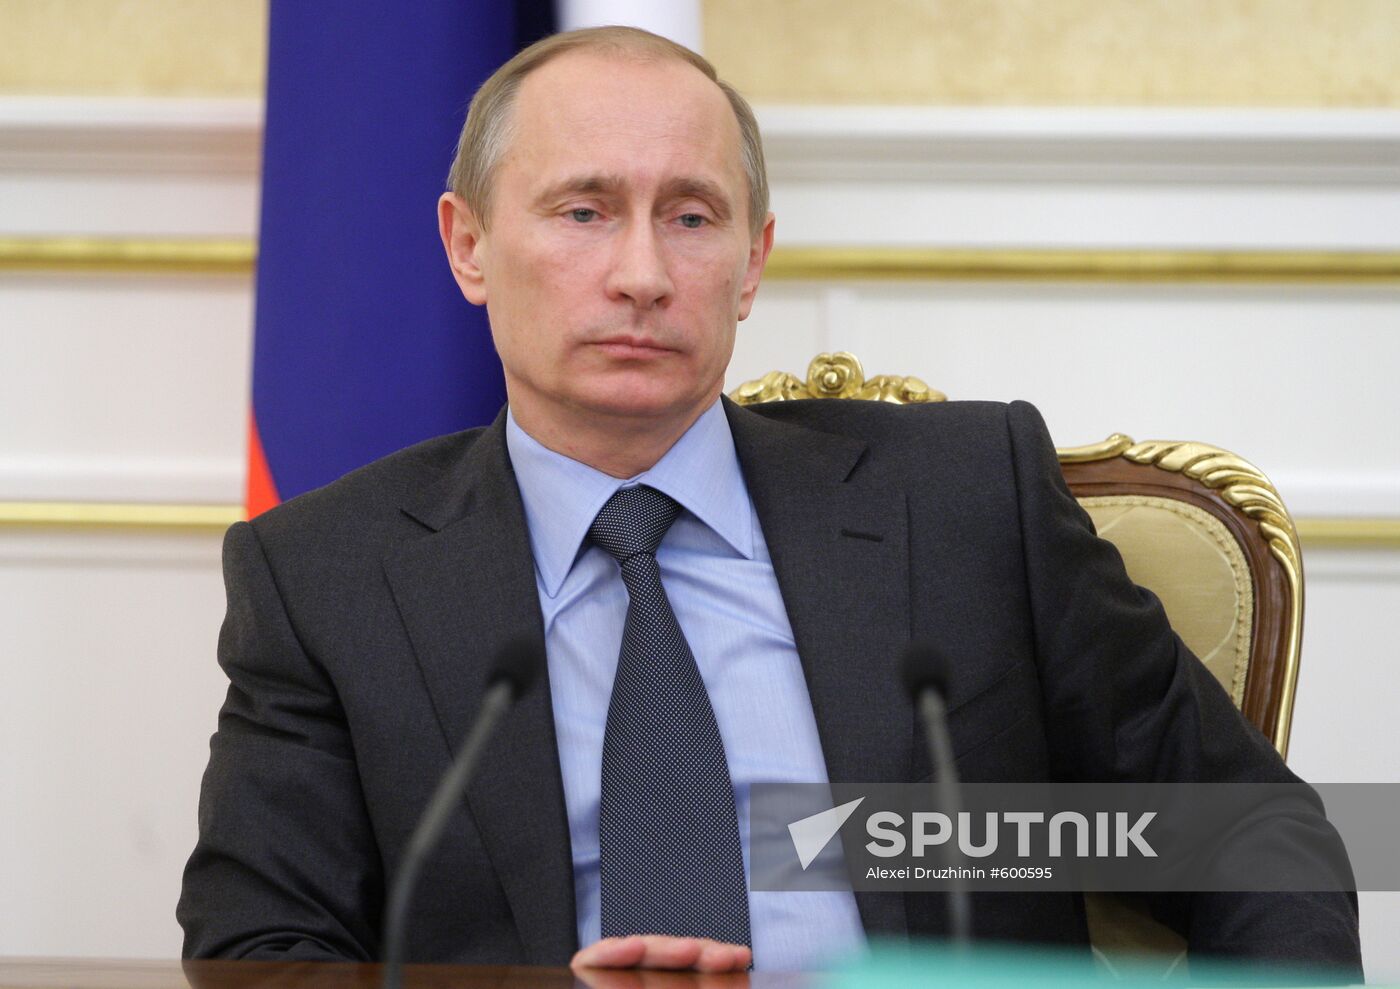 Russian Prime Minister Vladimir Putin